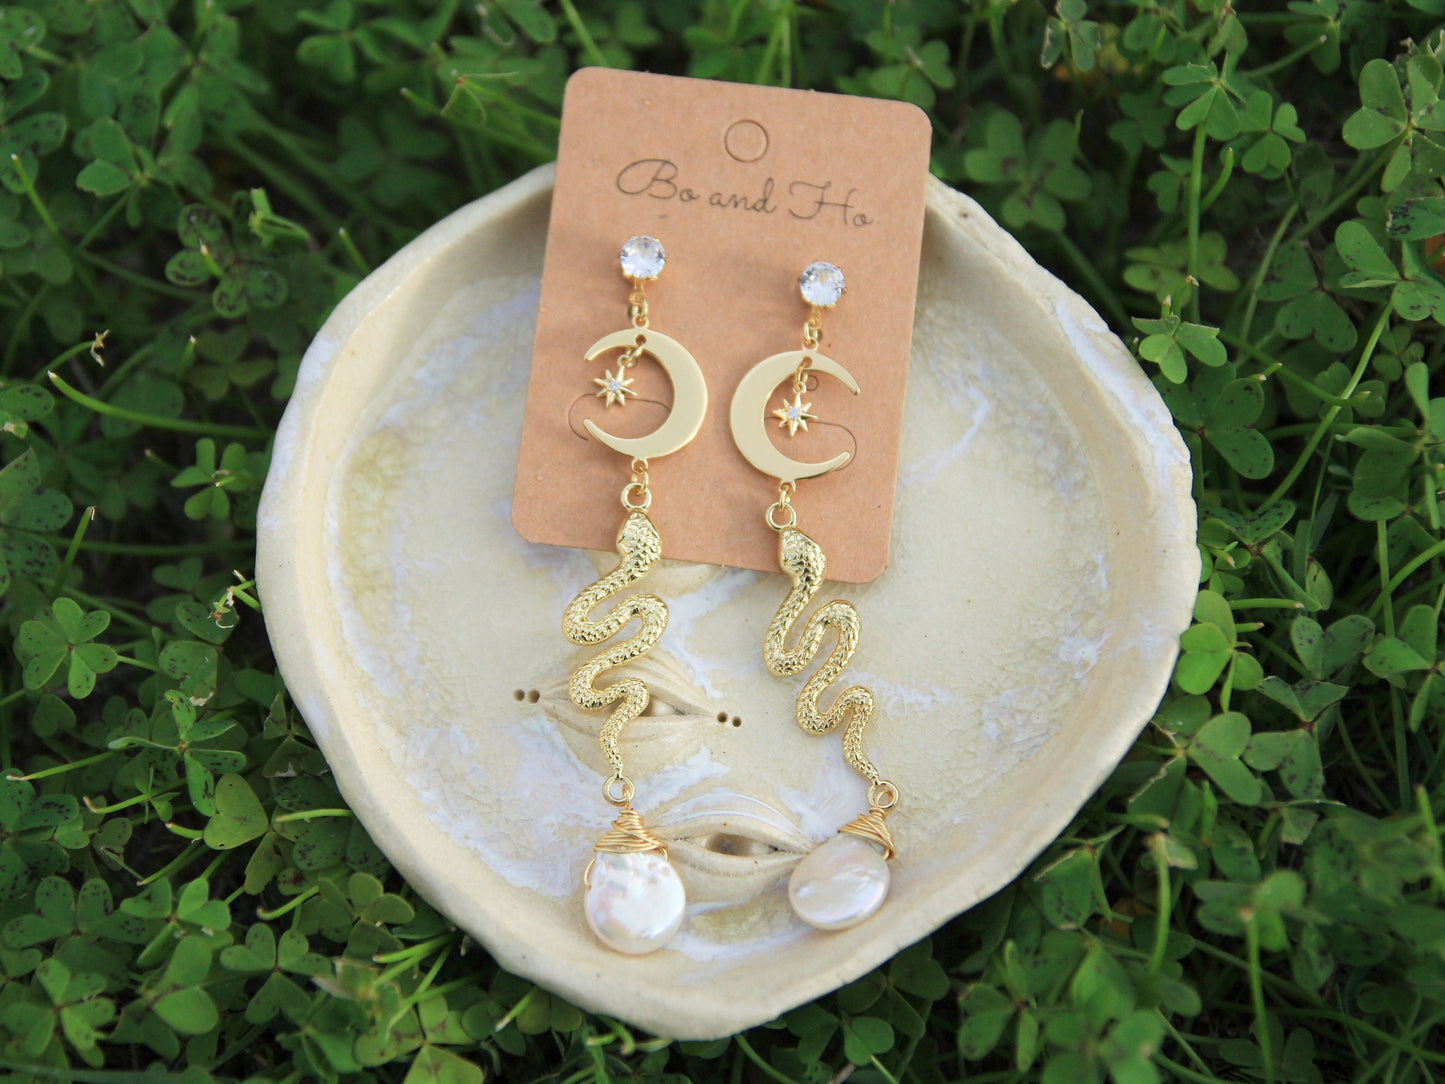 Celestial Snake Earrings with Large Genuine Pearls